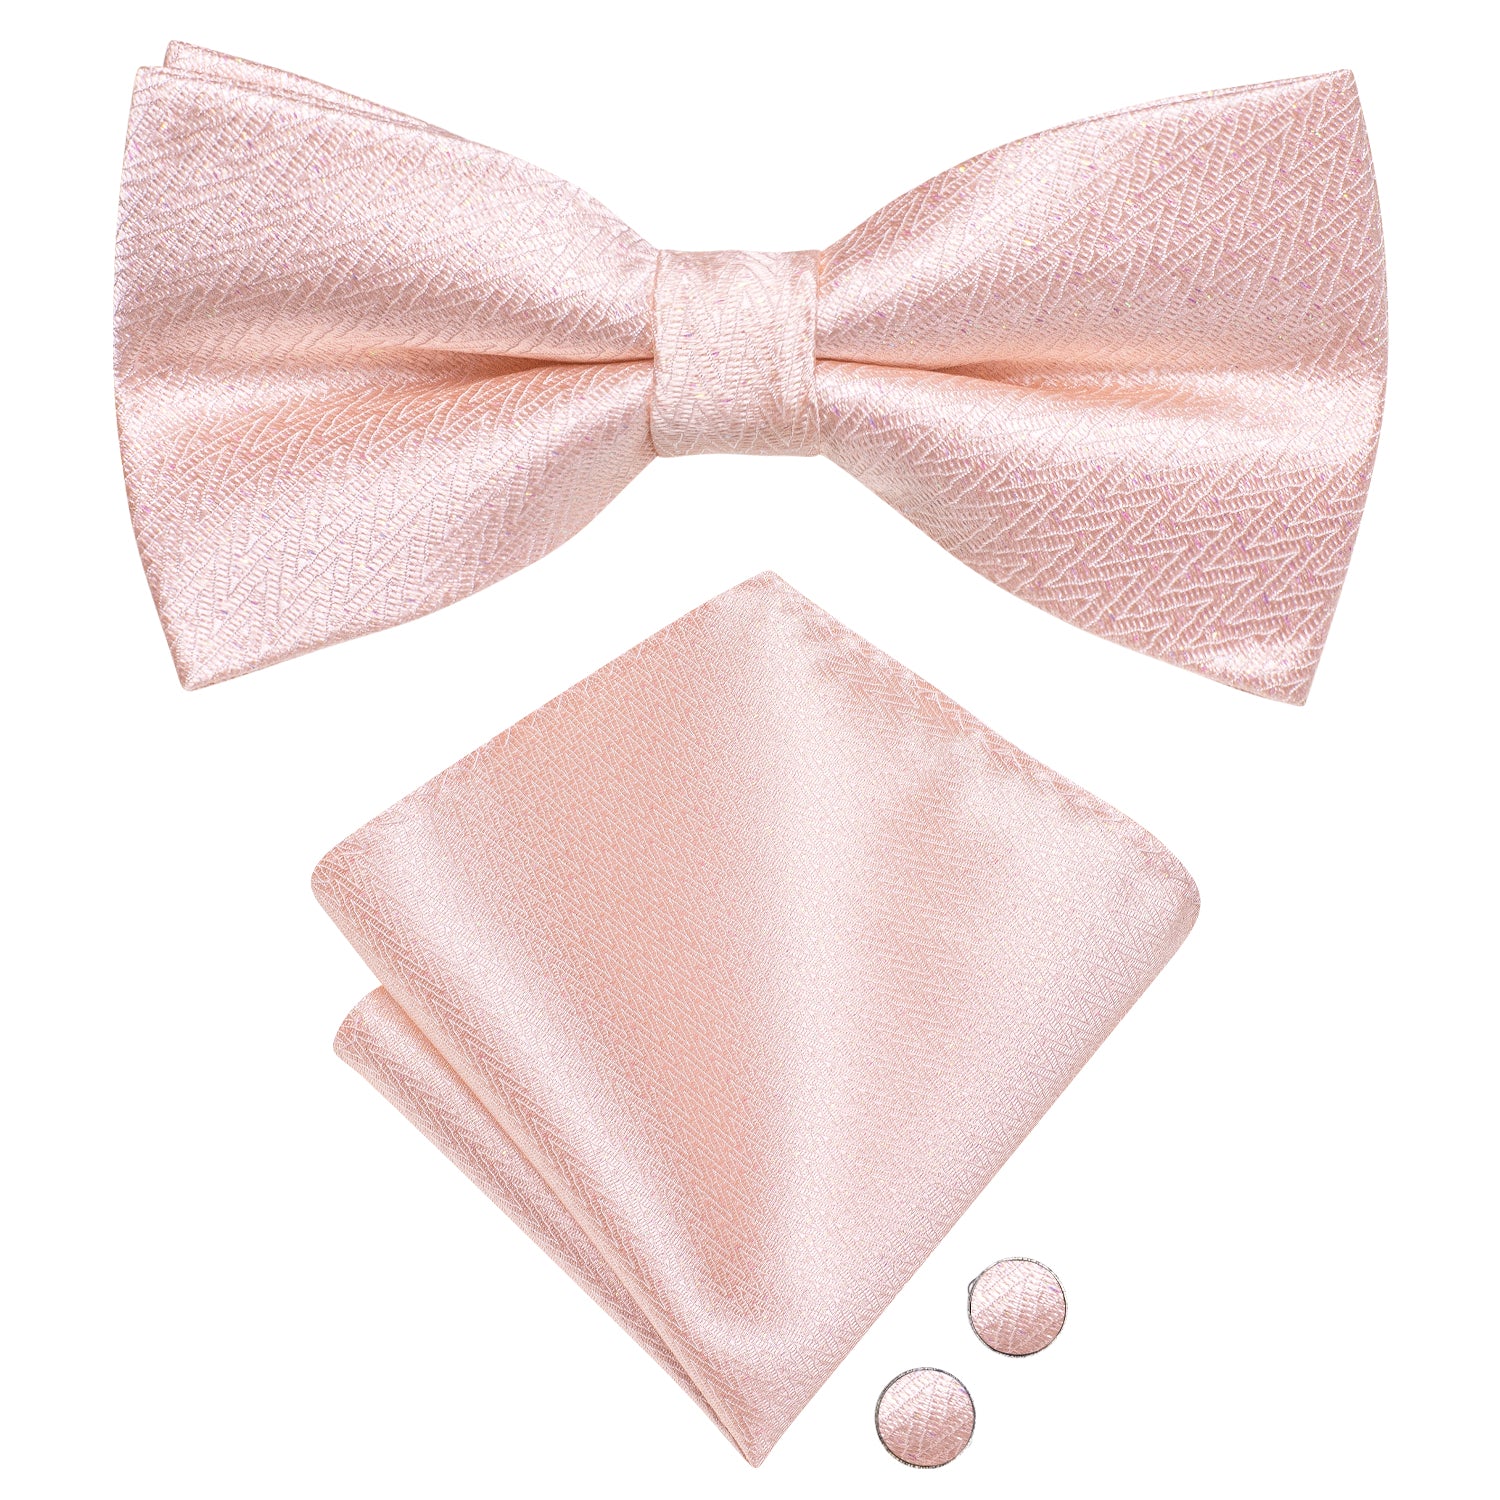 Baby Pink Striped Pre-tied Bow Tie Hanky Cufflinks Set